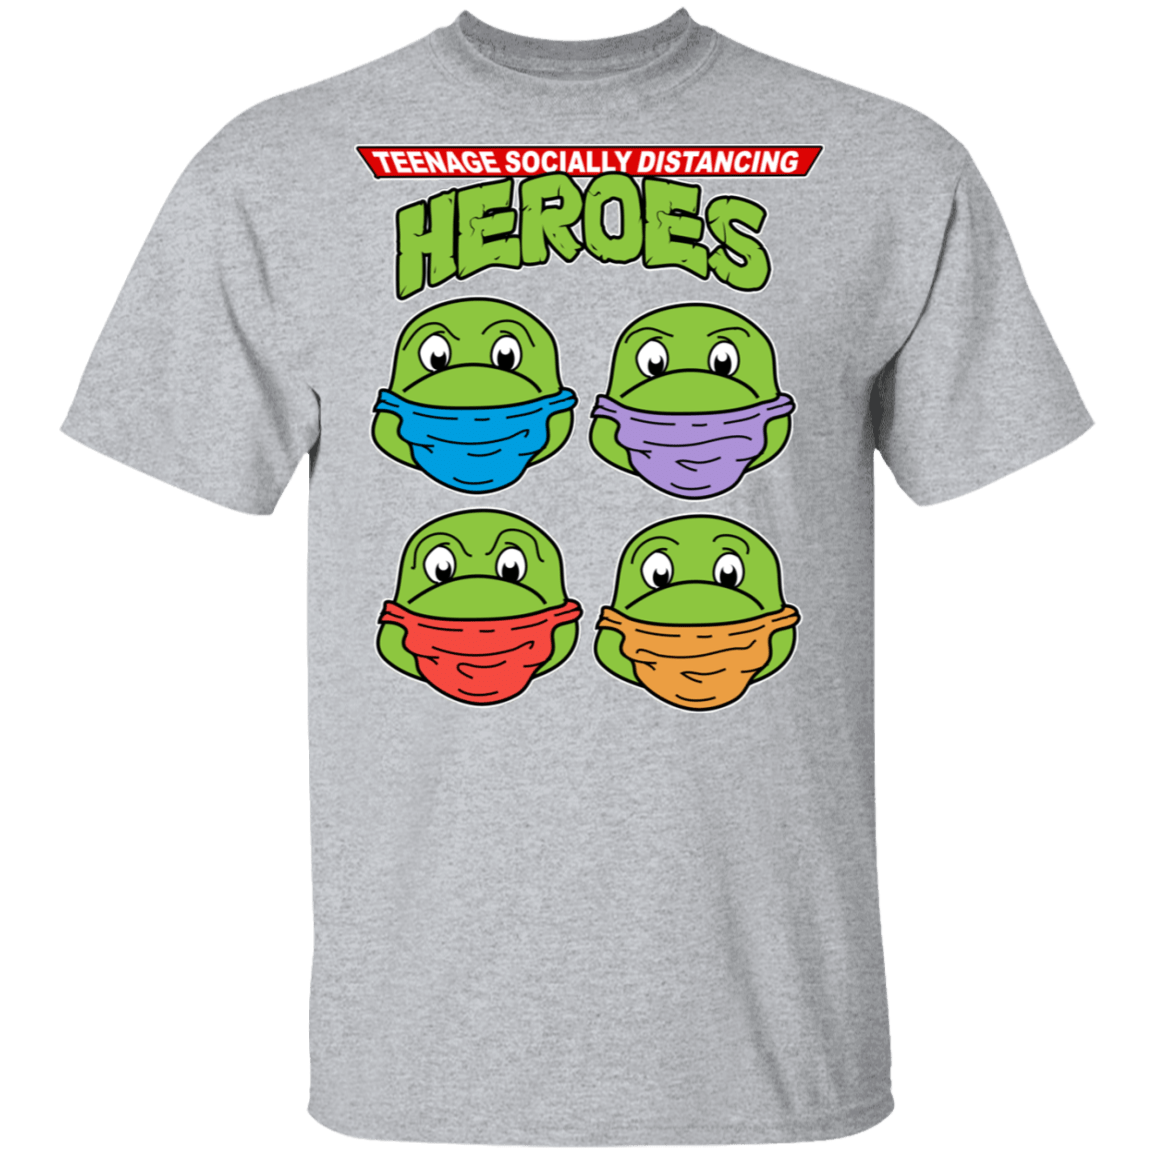 T-Shirts Sport Grey / S Teenage Socially Distancing Heroes T-Shirt